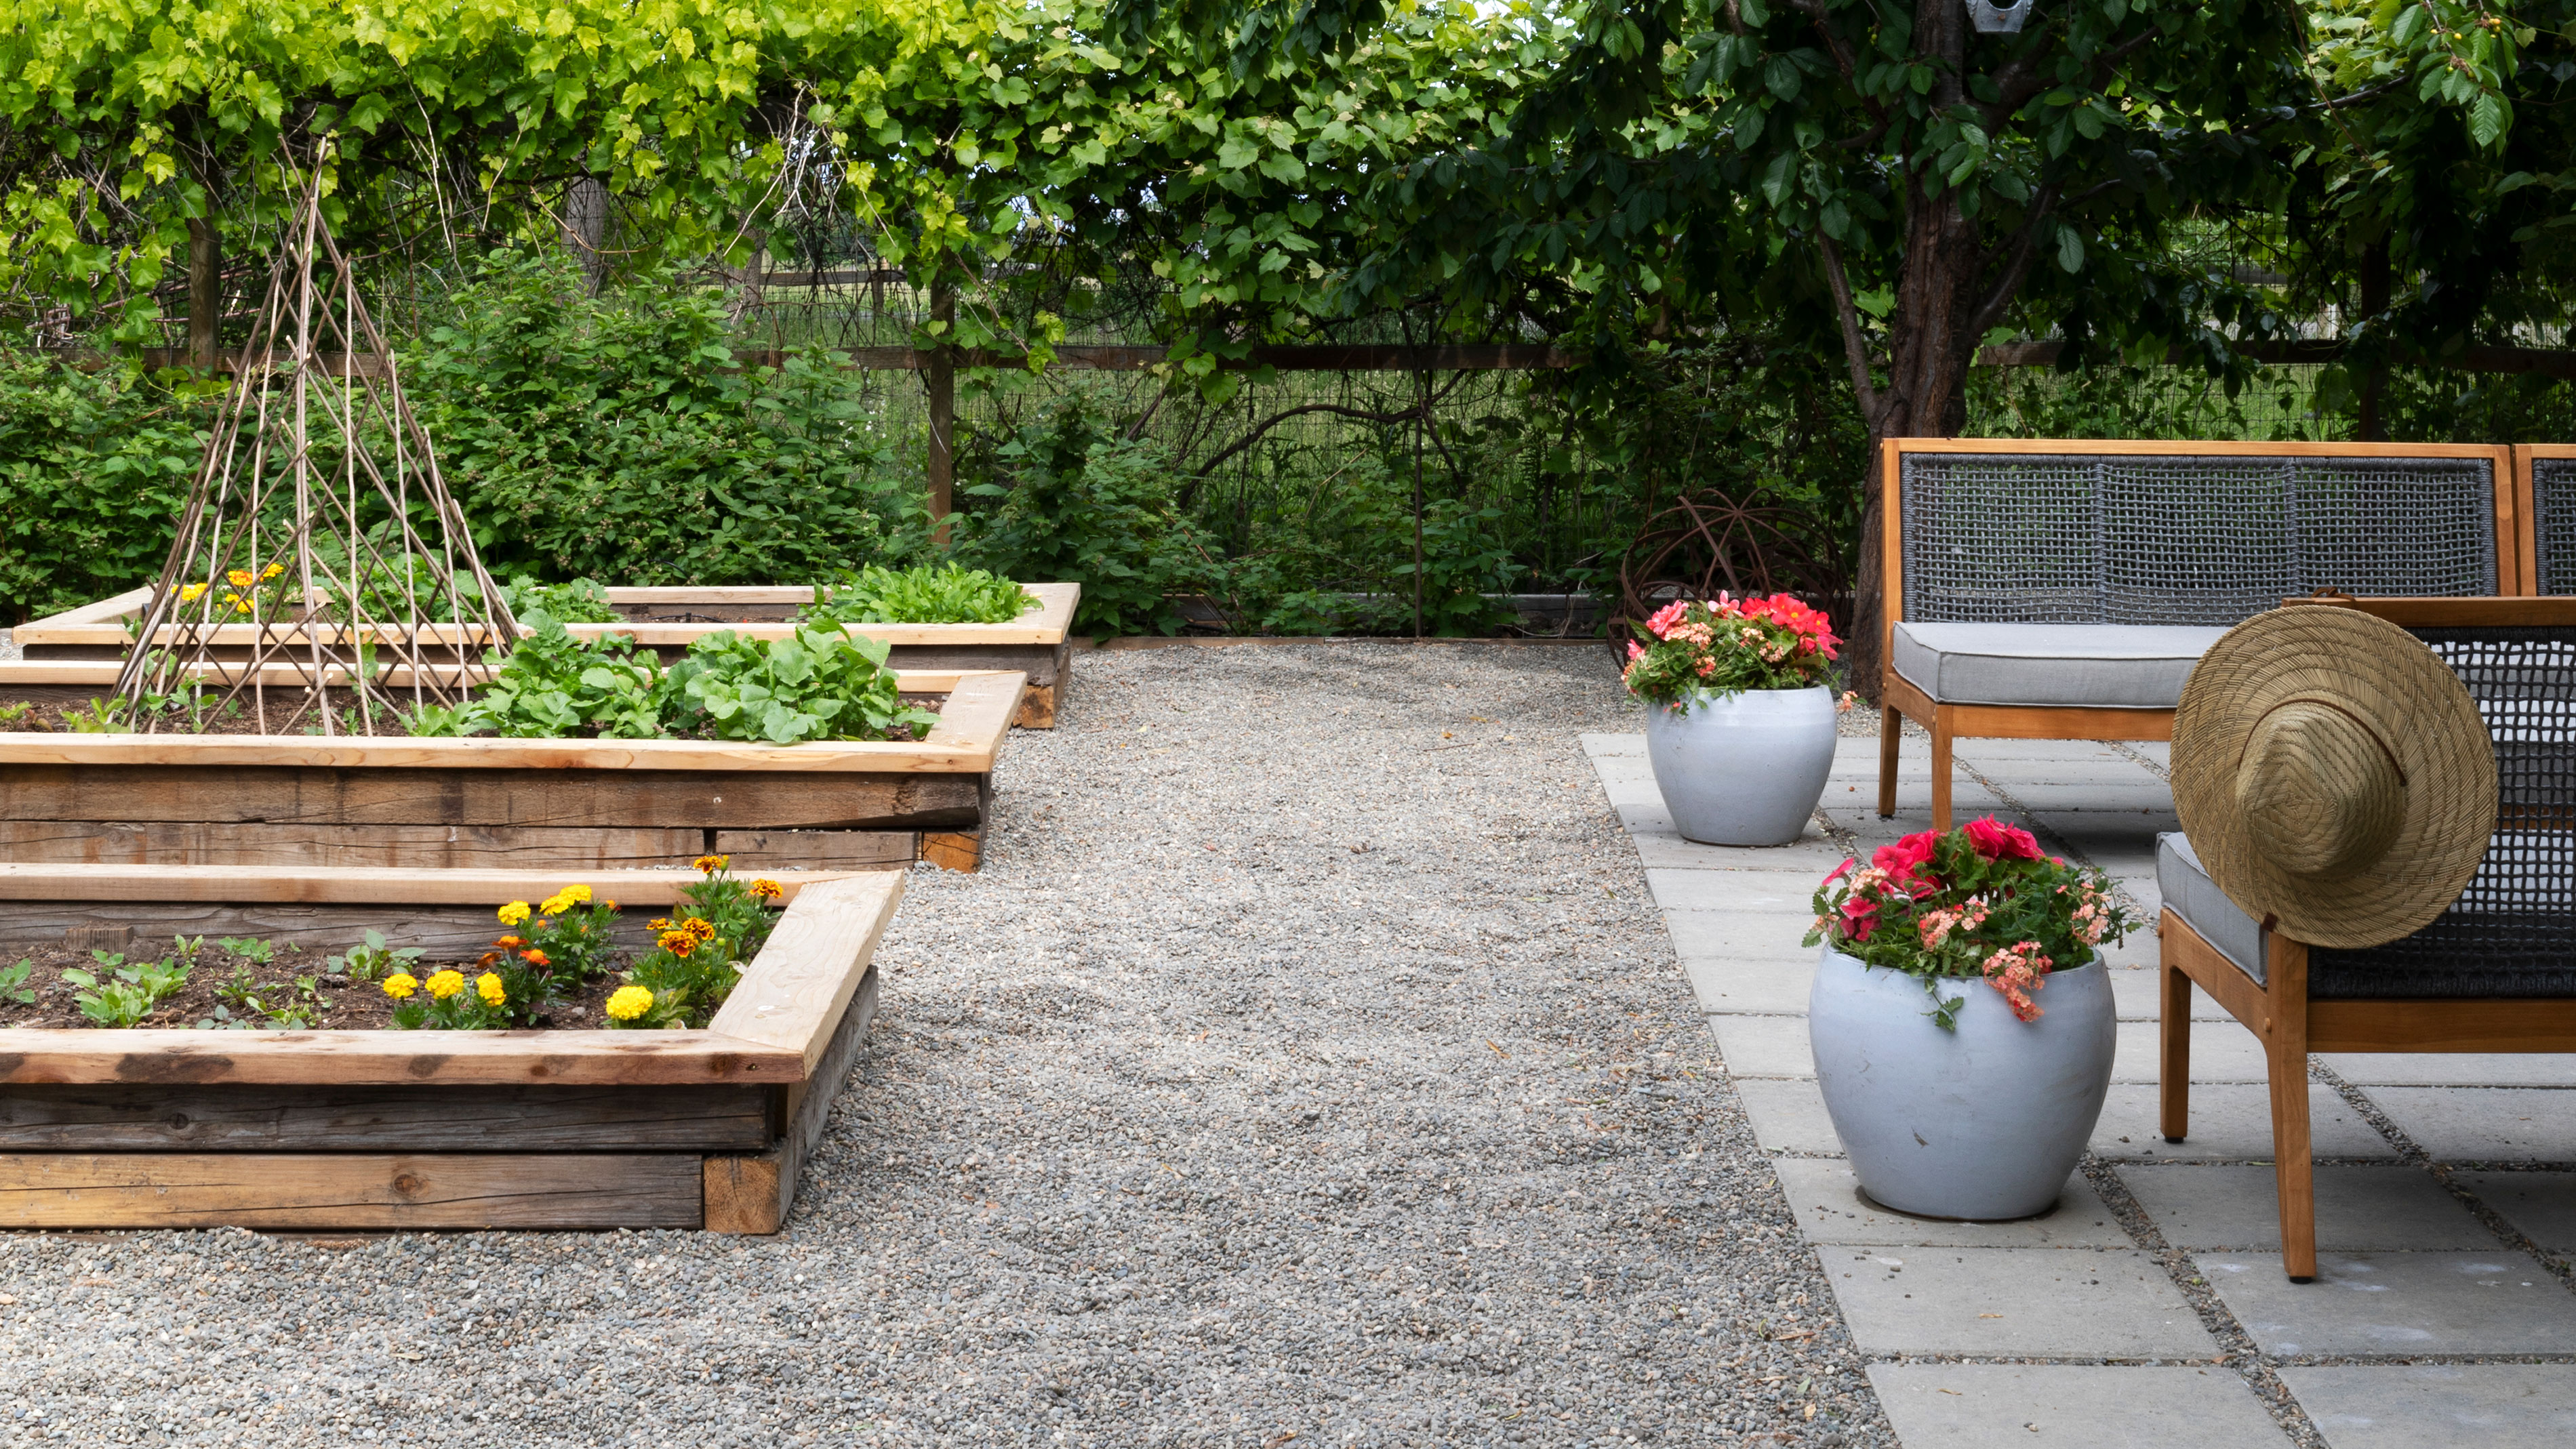 Backyard Ideas On A Budget Create An, How To Landscape A Yard On Budget